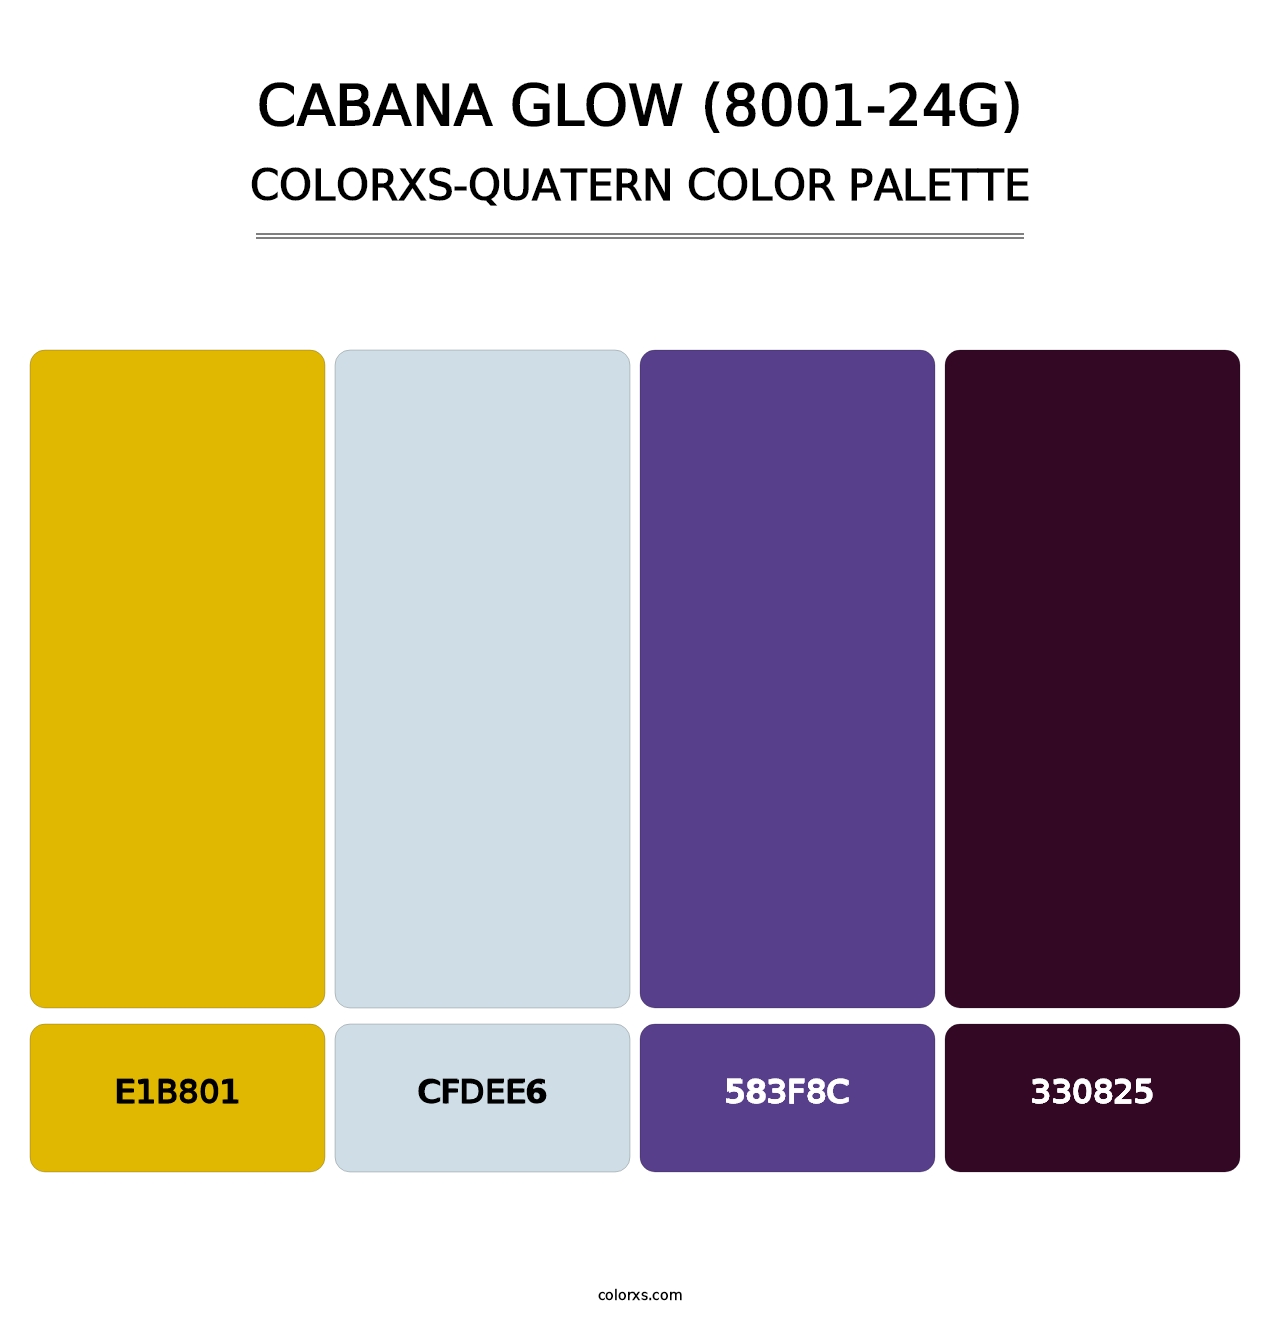 Cabana Glow (8001-24G) - Colorxs Quatern Palette